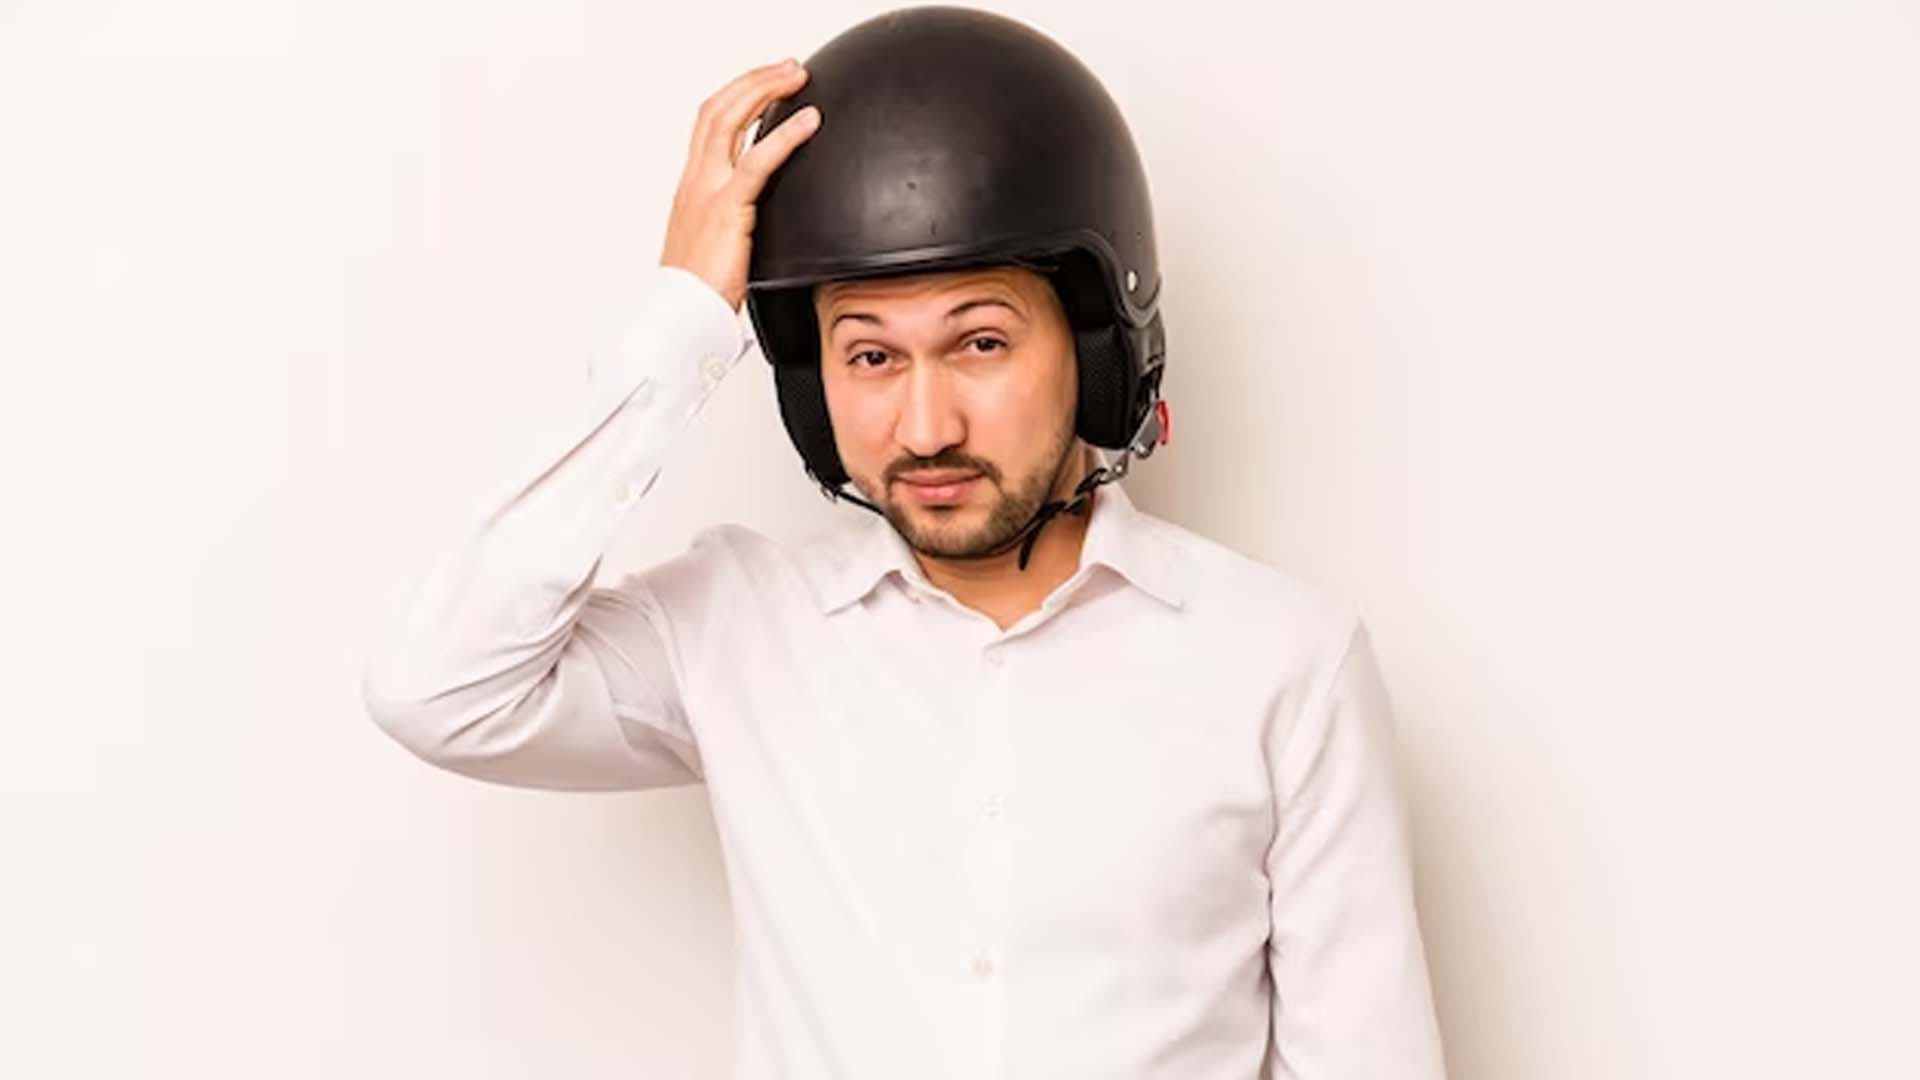 Does Helmet Cause Hair Loss?